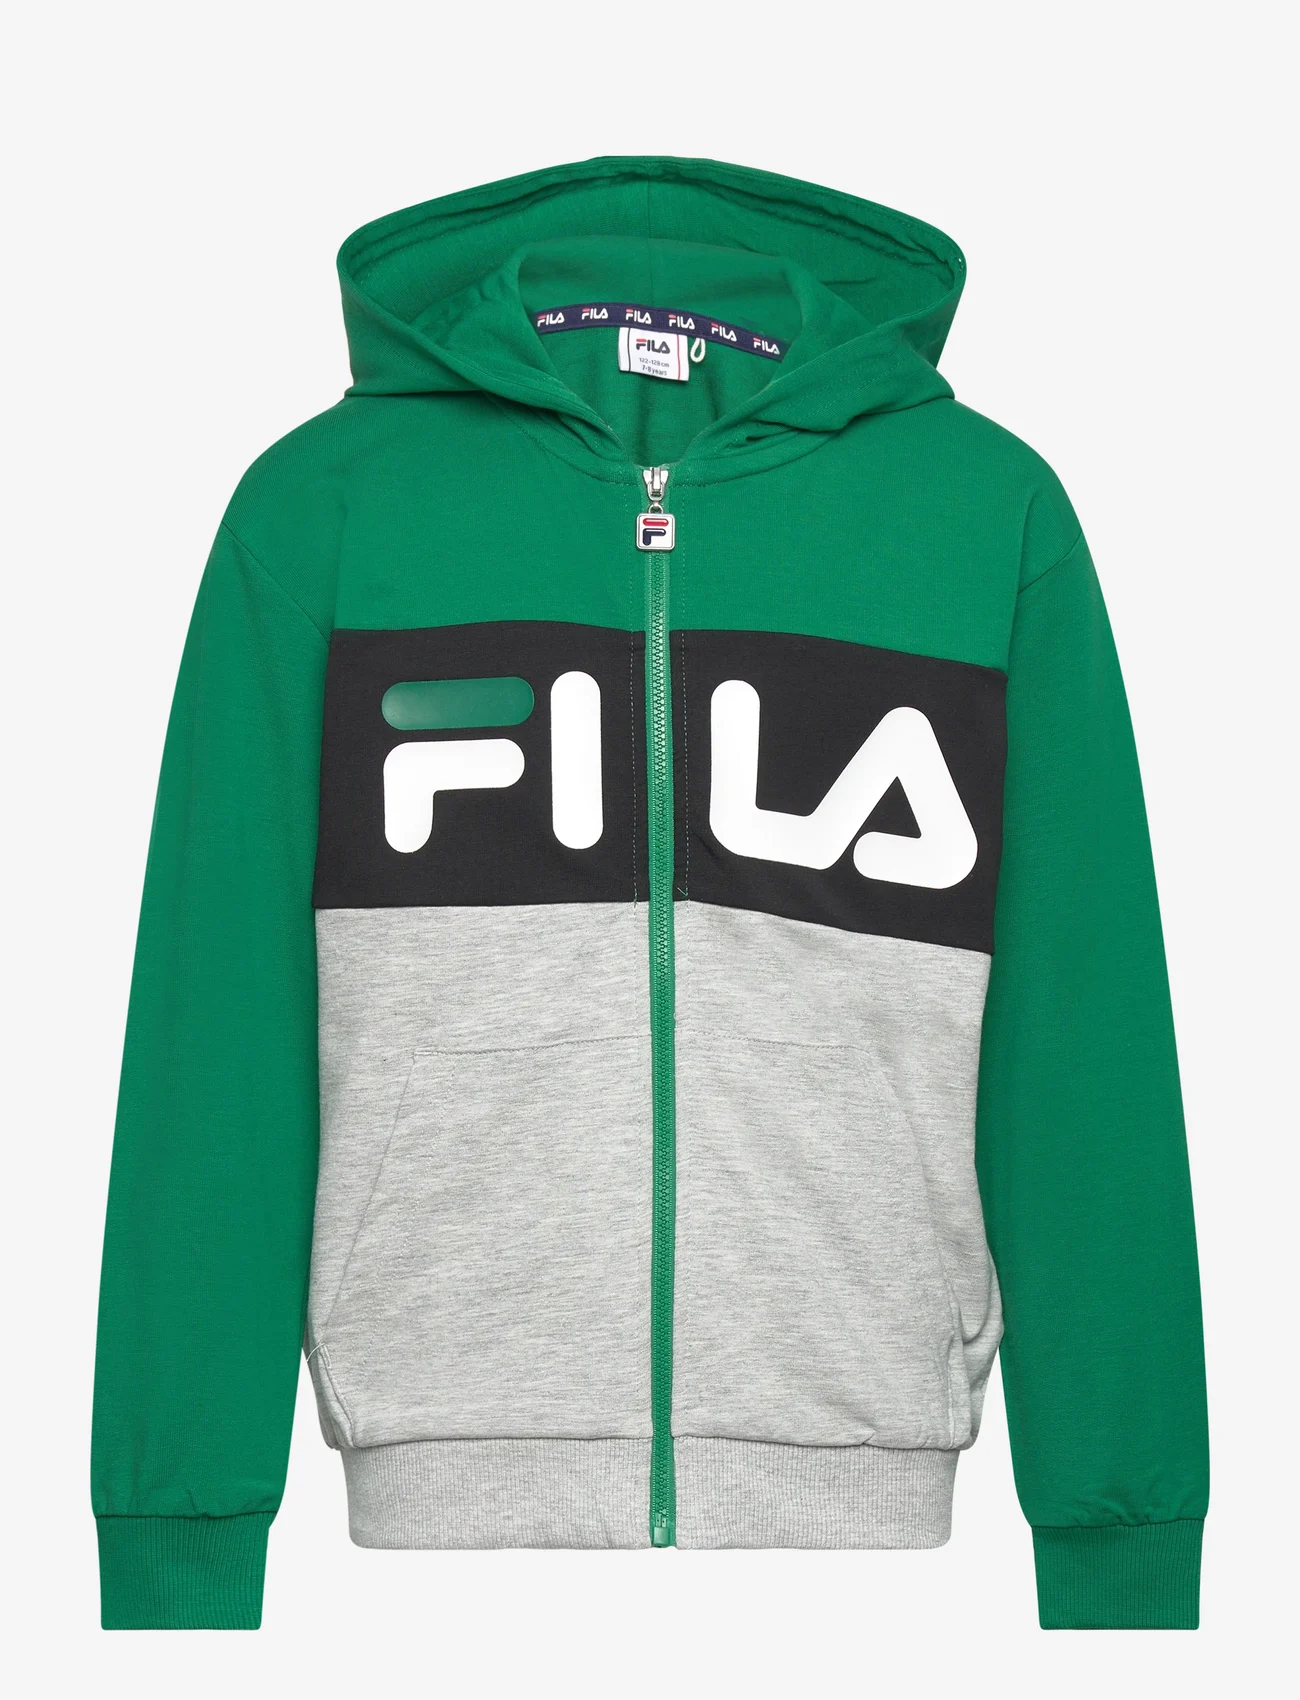 FILA - BAAR-EBENHAUSEN - hoodies - light grey melange-verdant green-bl - 0